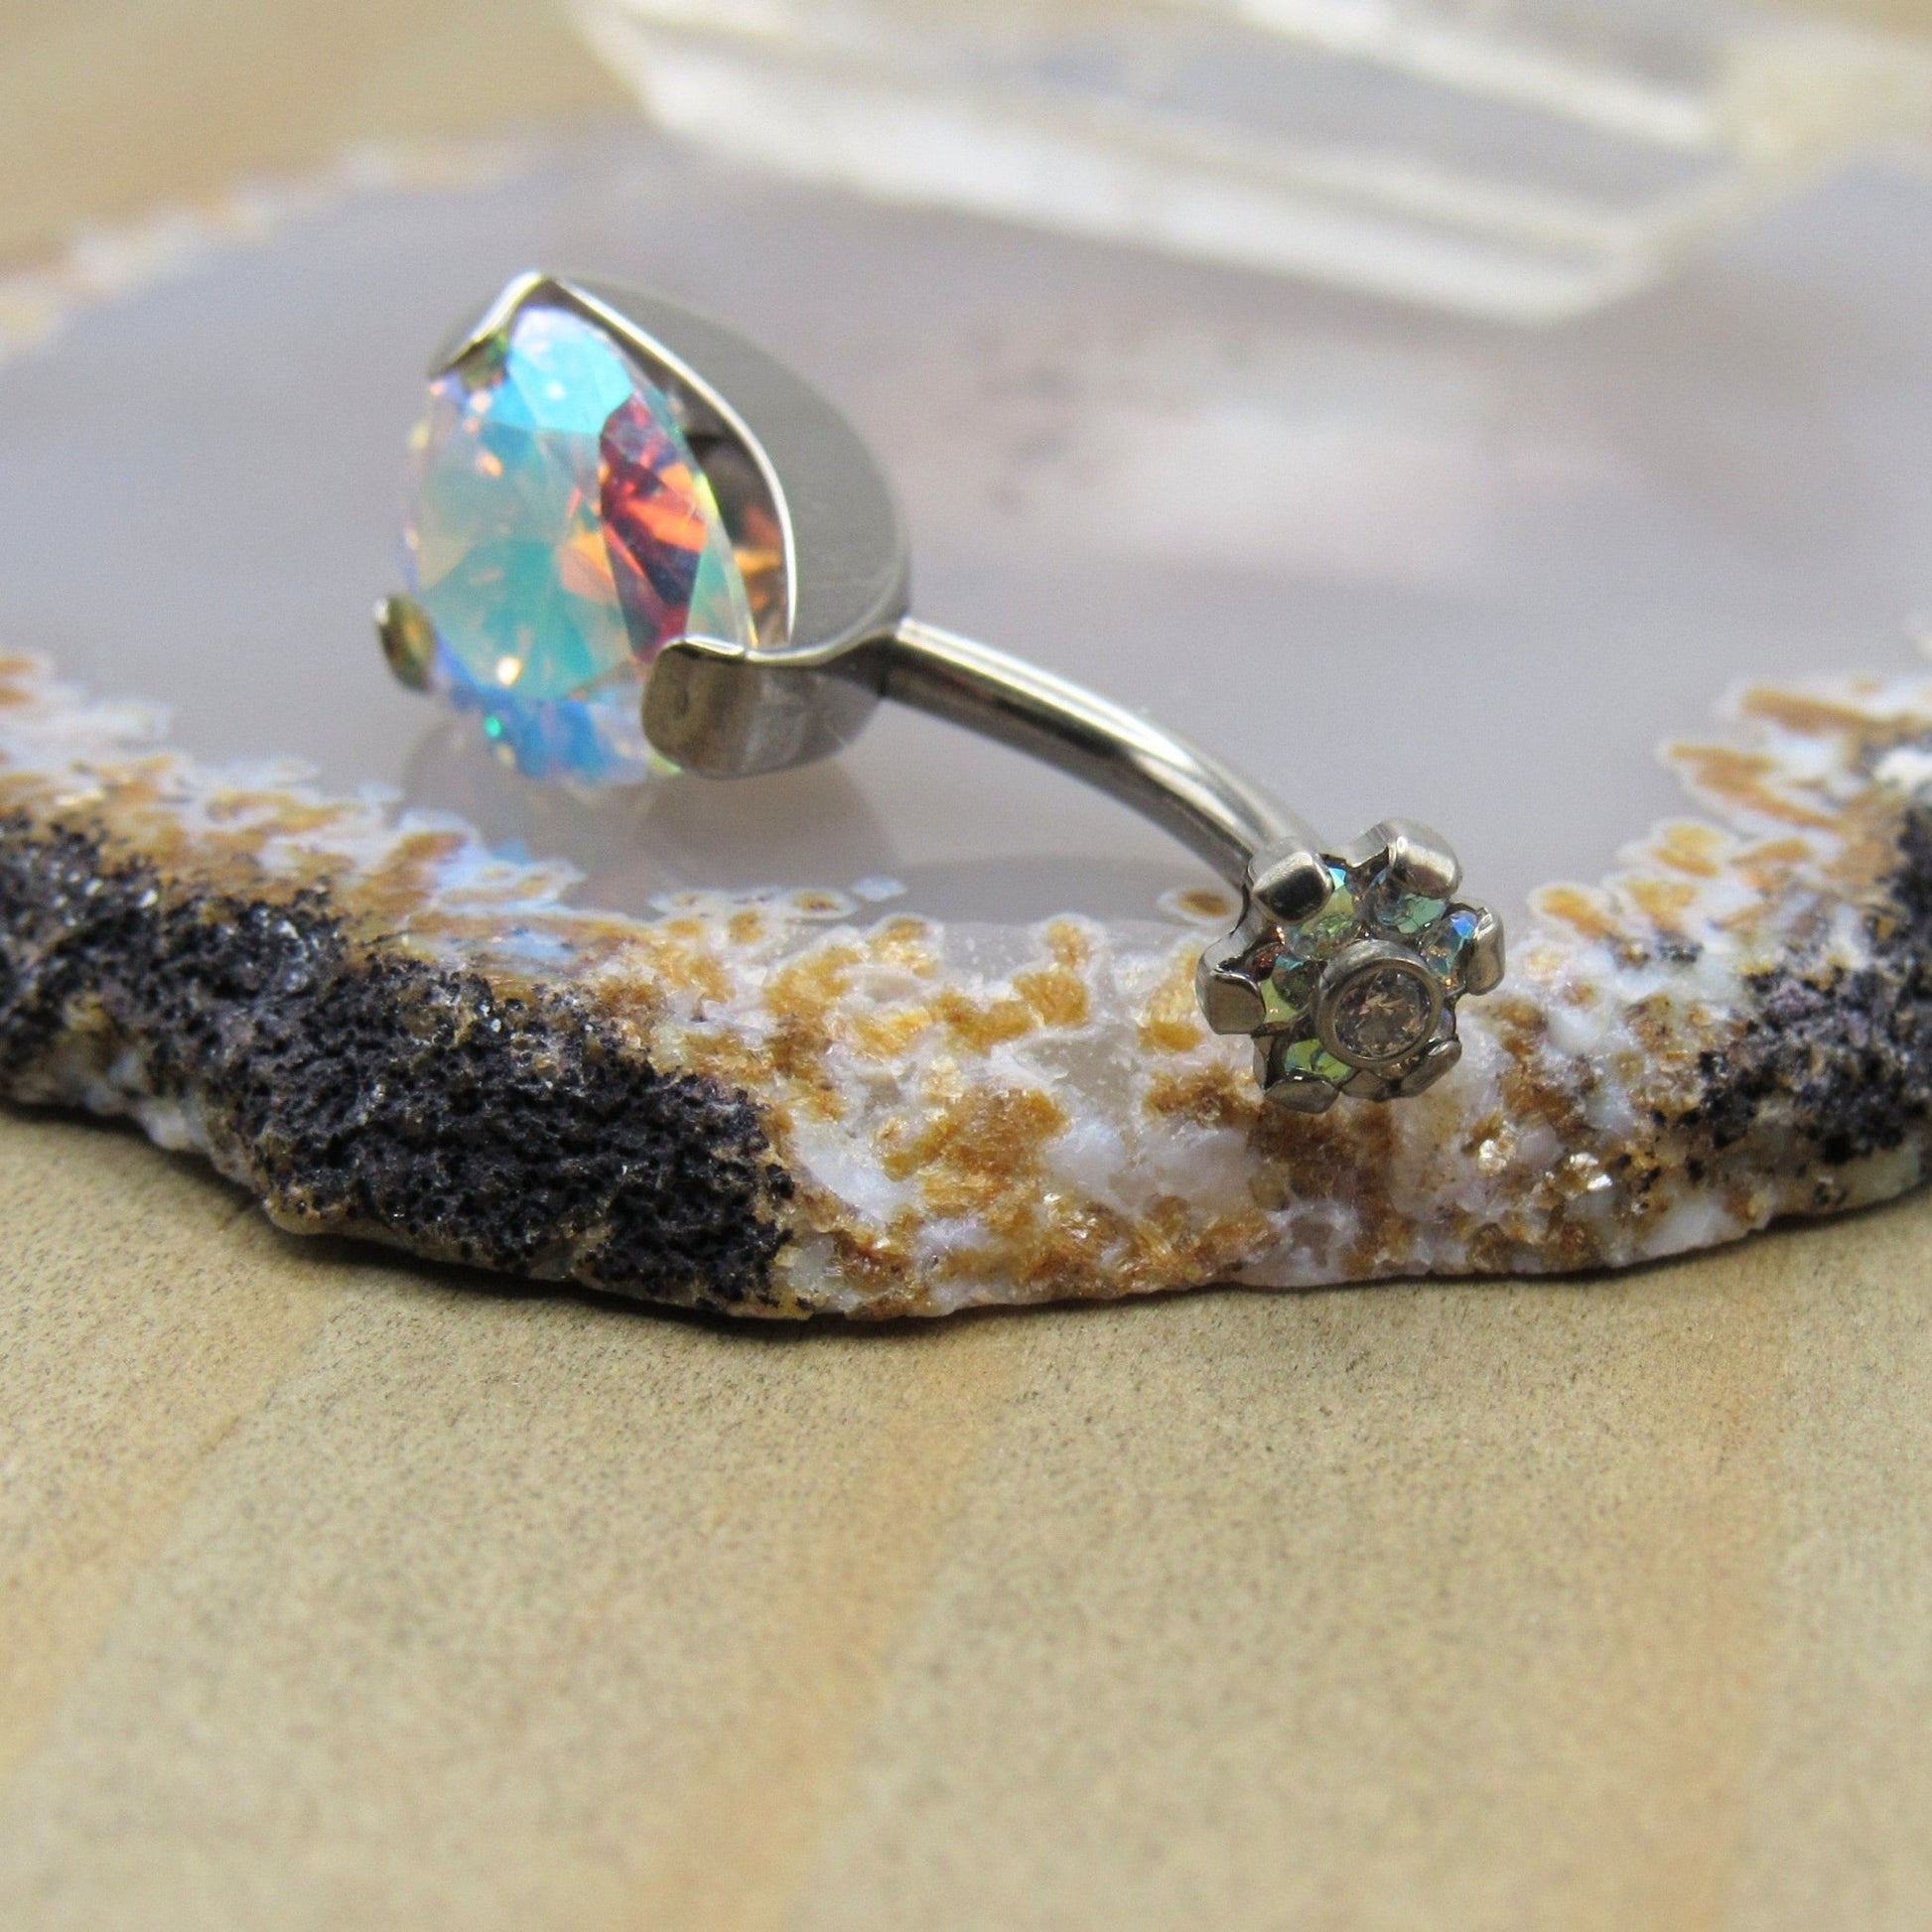 Titanium belly button piercing ring 14g 3/8" double aurora borealis gemstone navel curve - Siren Body Jewelry